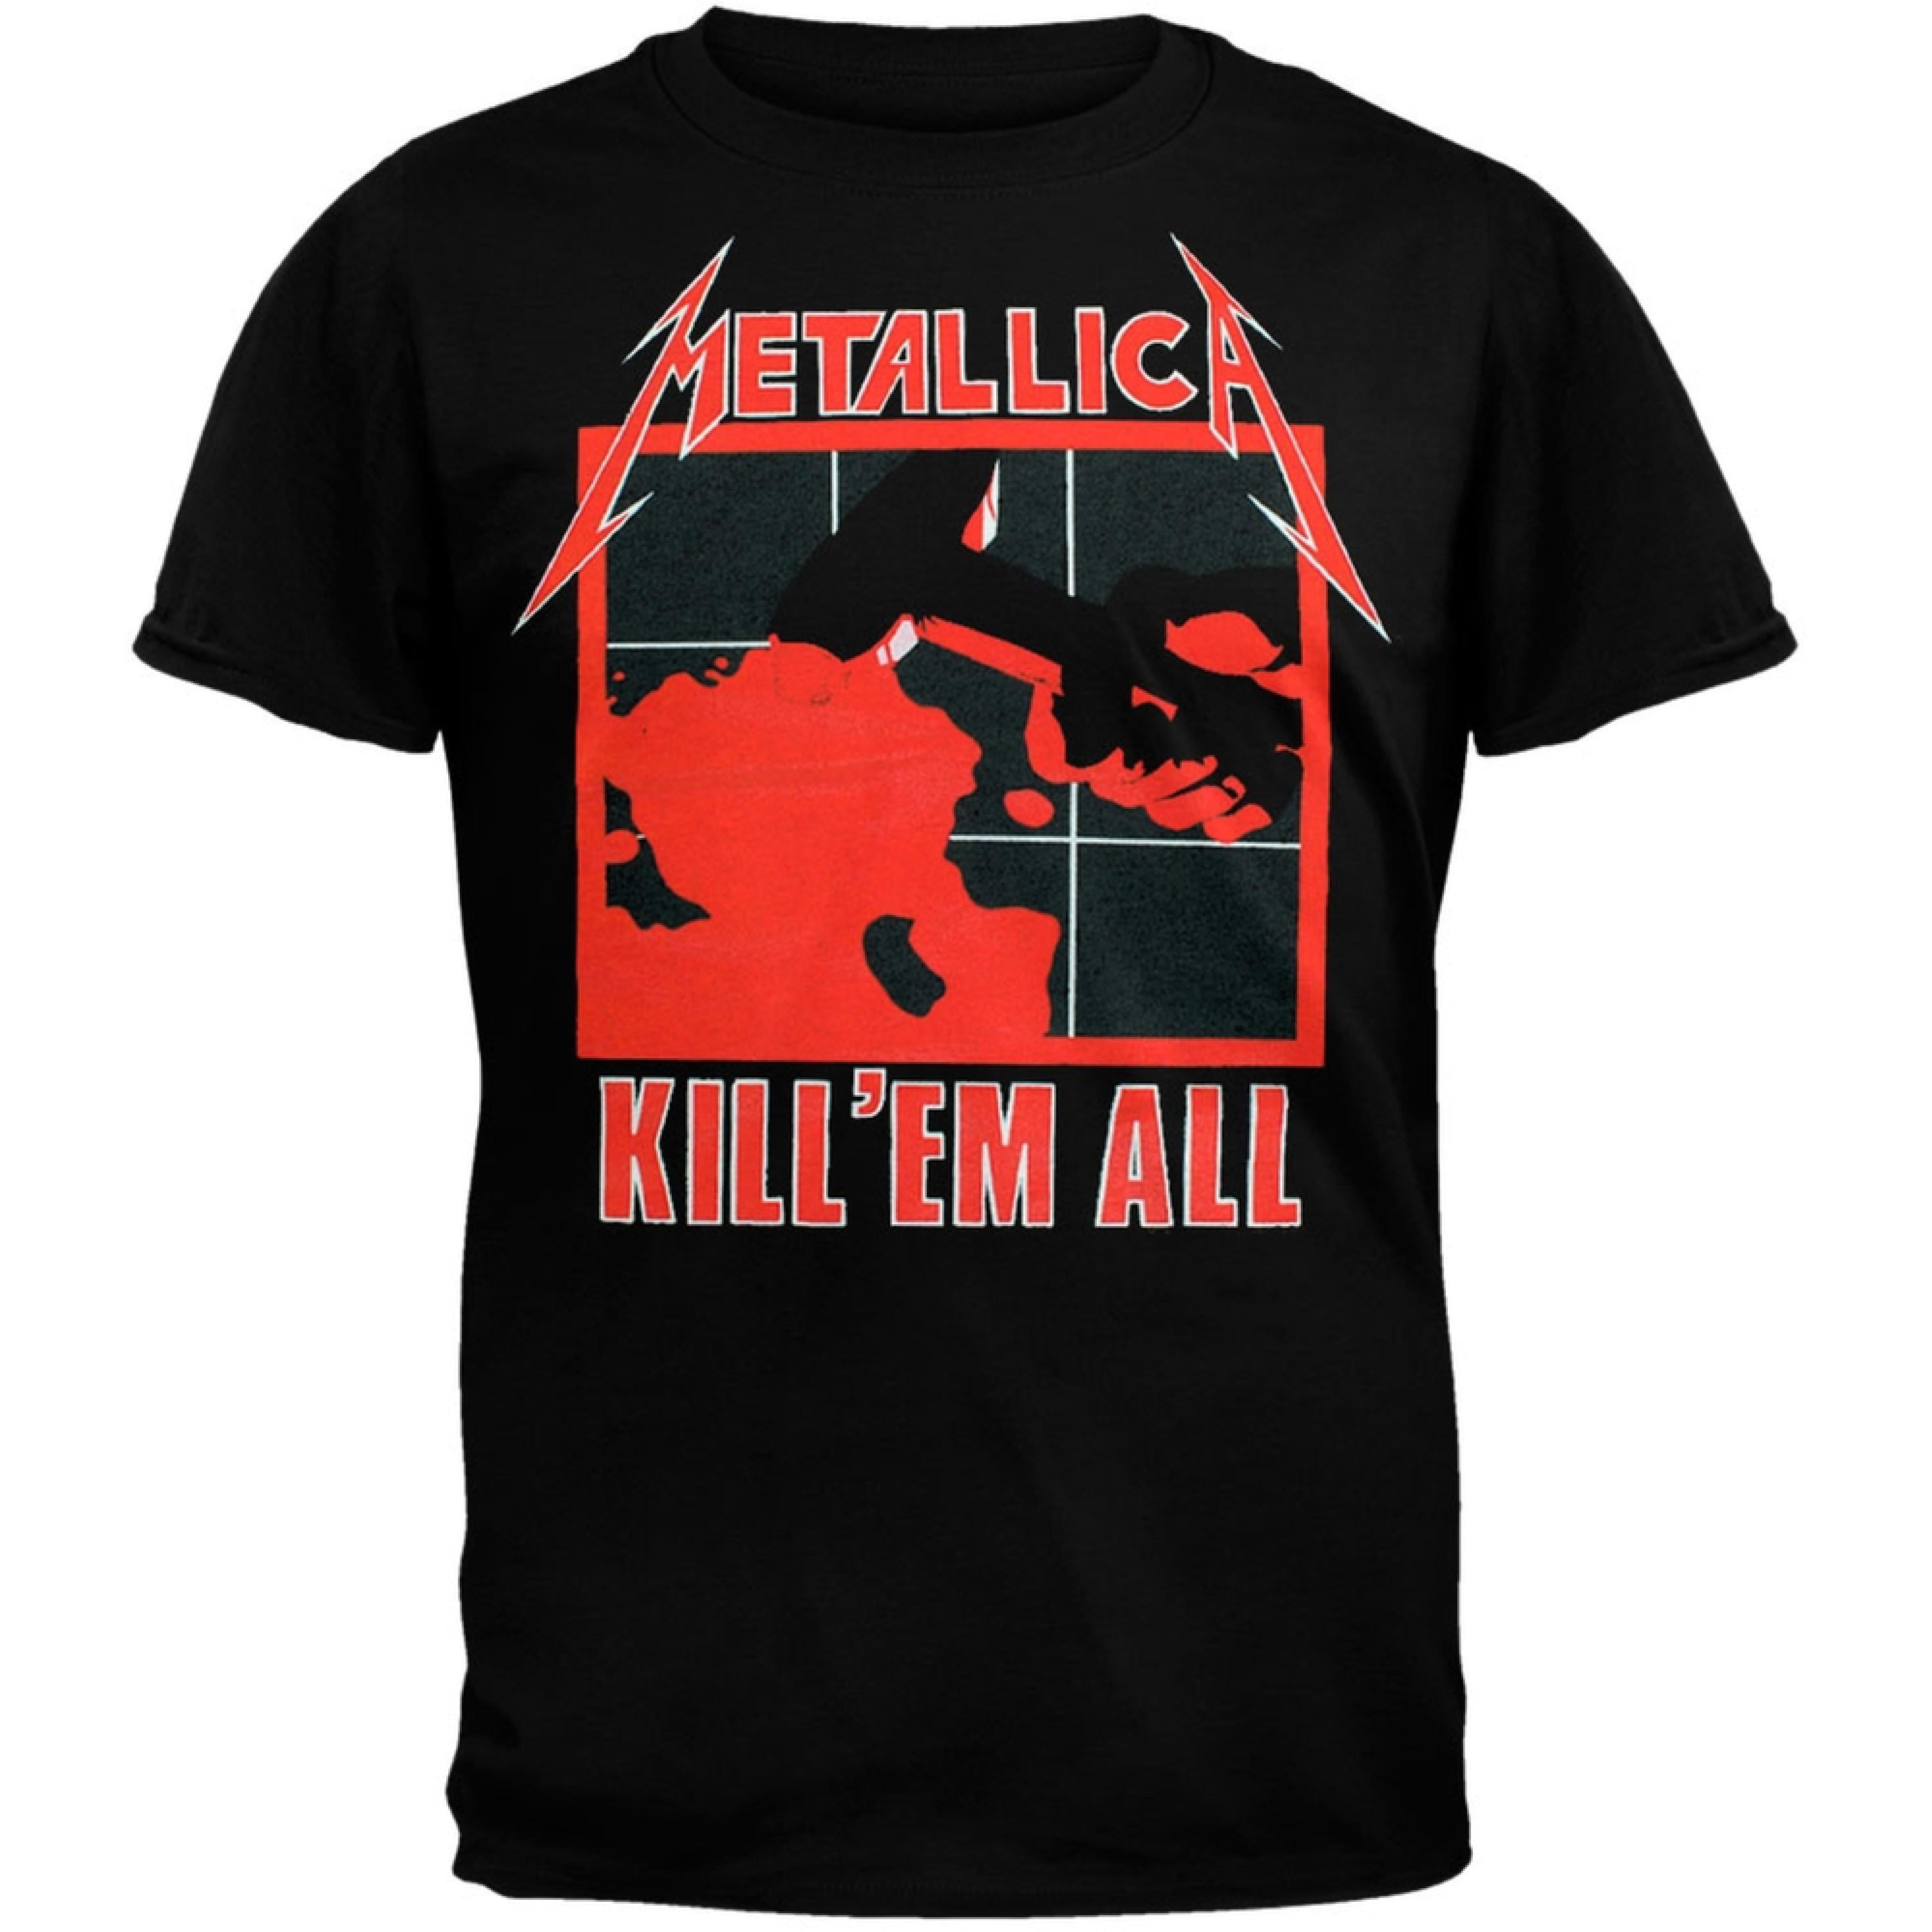 Metallica - Metallica - Kill 'em All T-Shirt - Walmart.com - Walmart.com